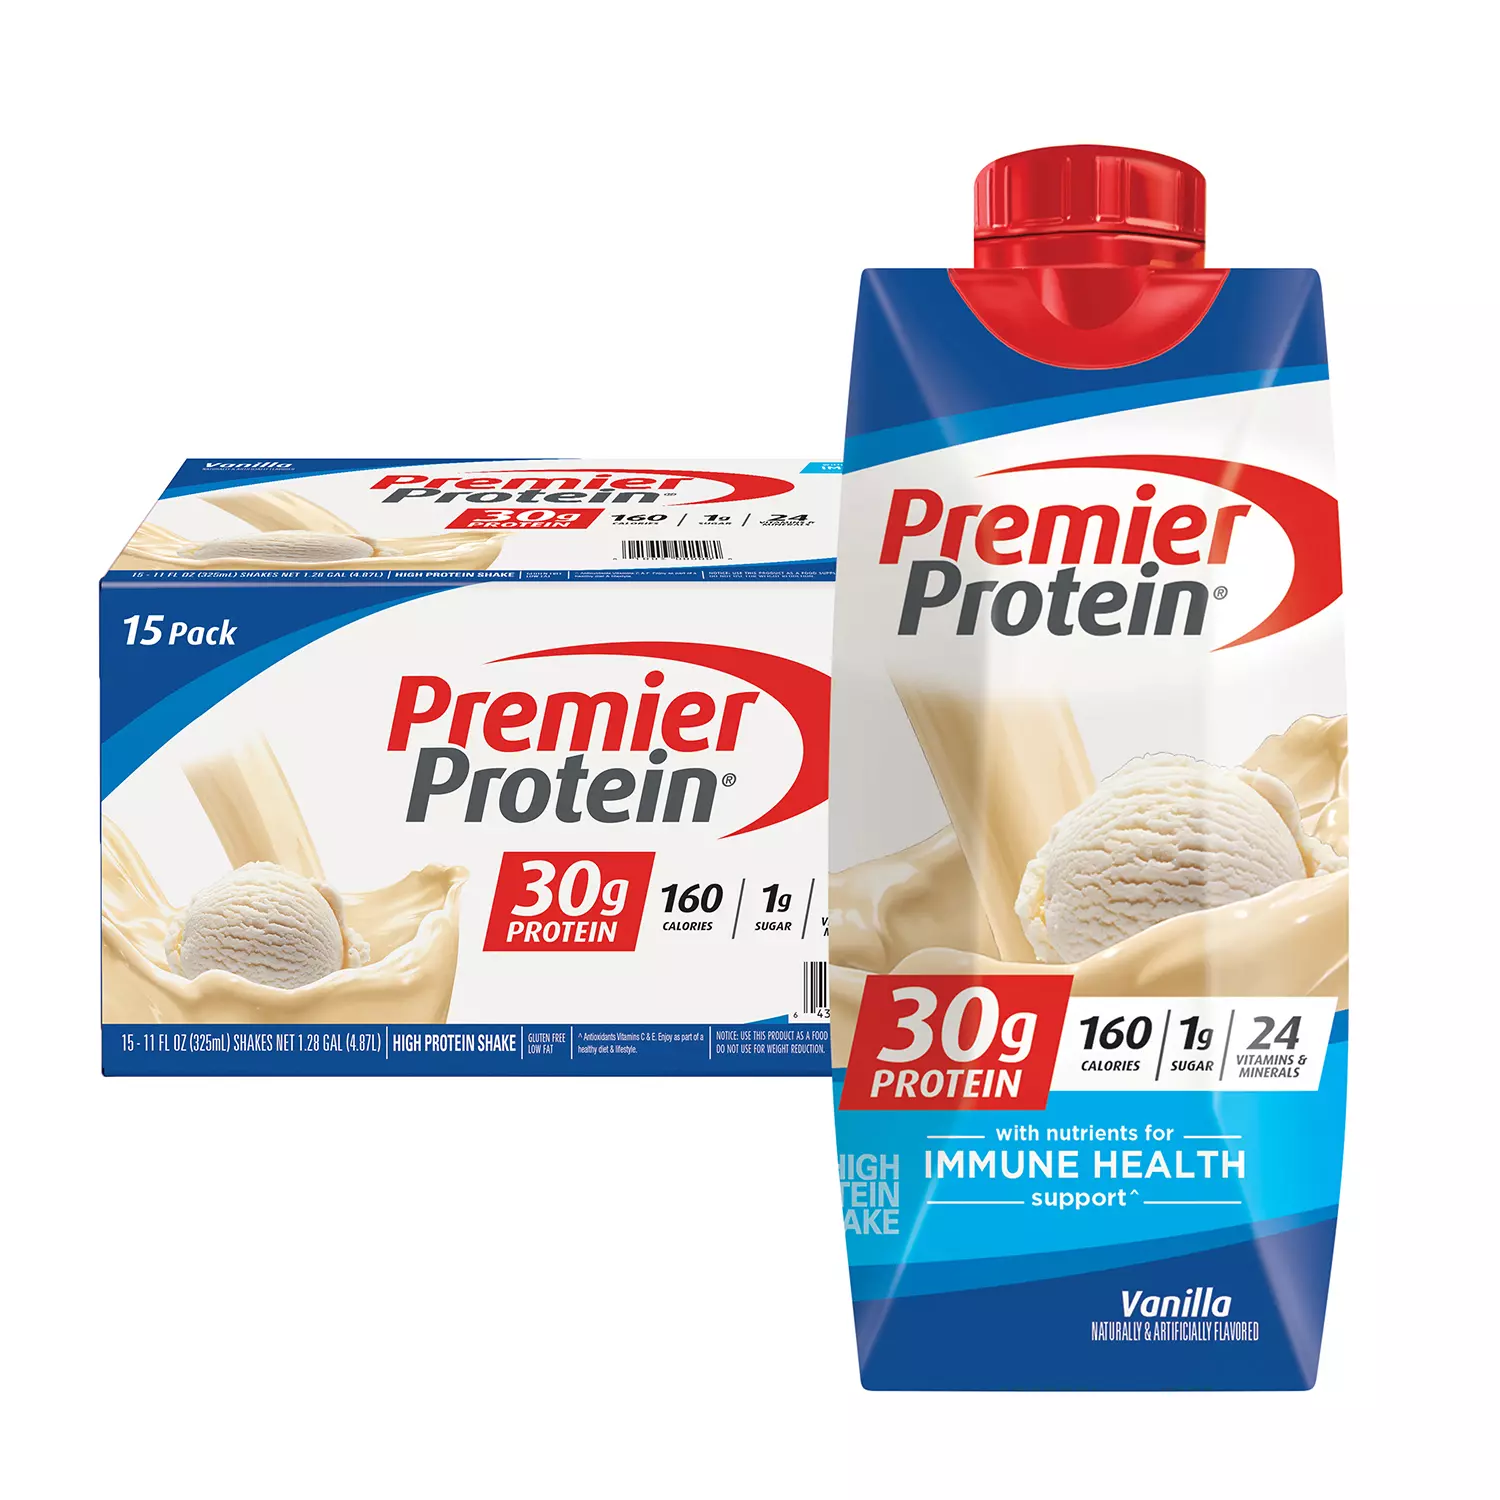 Premier Protein High Protein Shake Vanilla (11 fl. oz., 15 pk.)